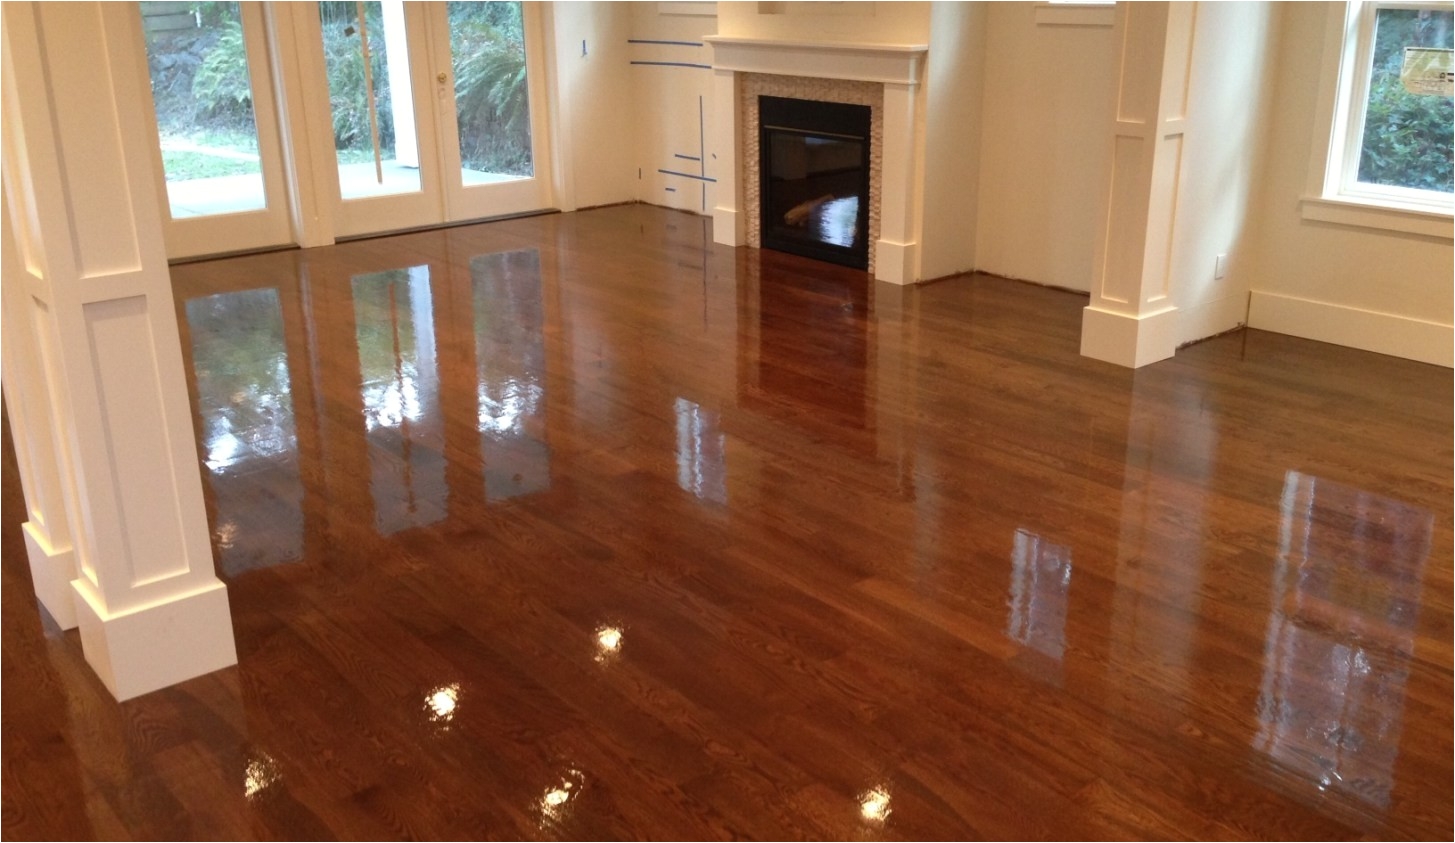 interior marvelous beautiful cleaning laminate floors 3 bona pro hardwood floor cleaner cleaners thrilling of beautiful